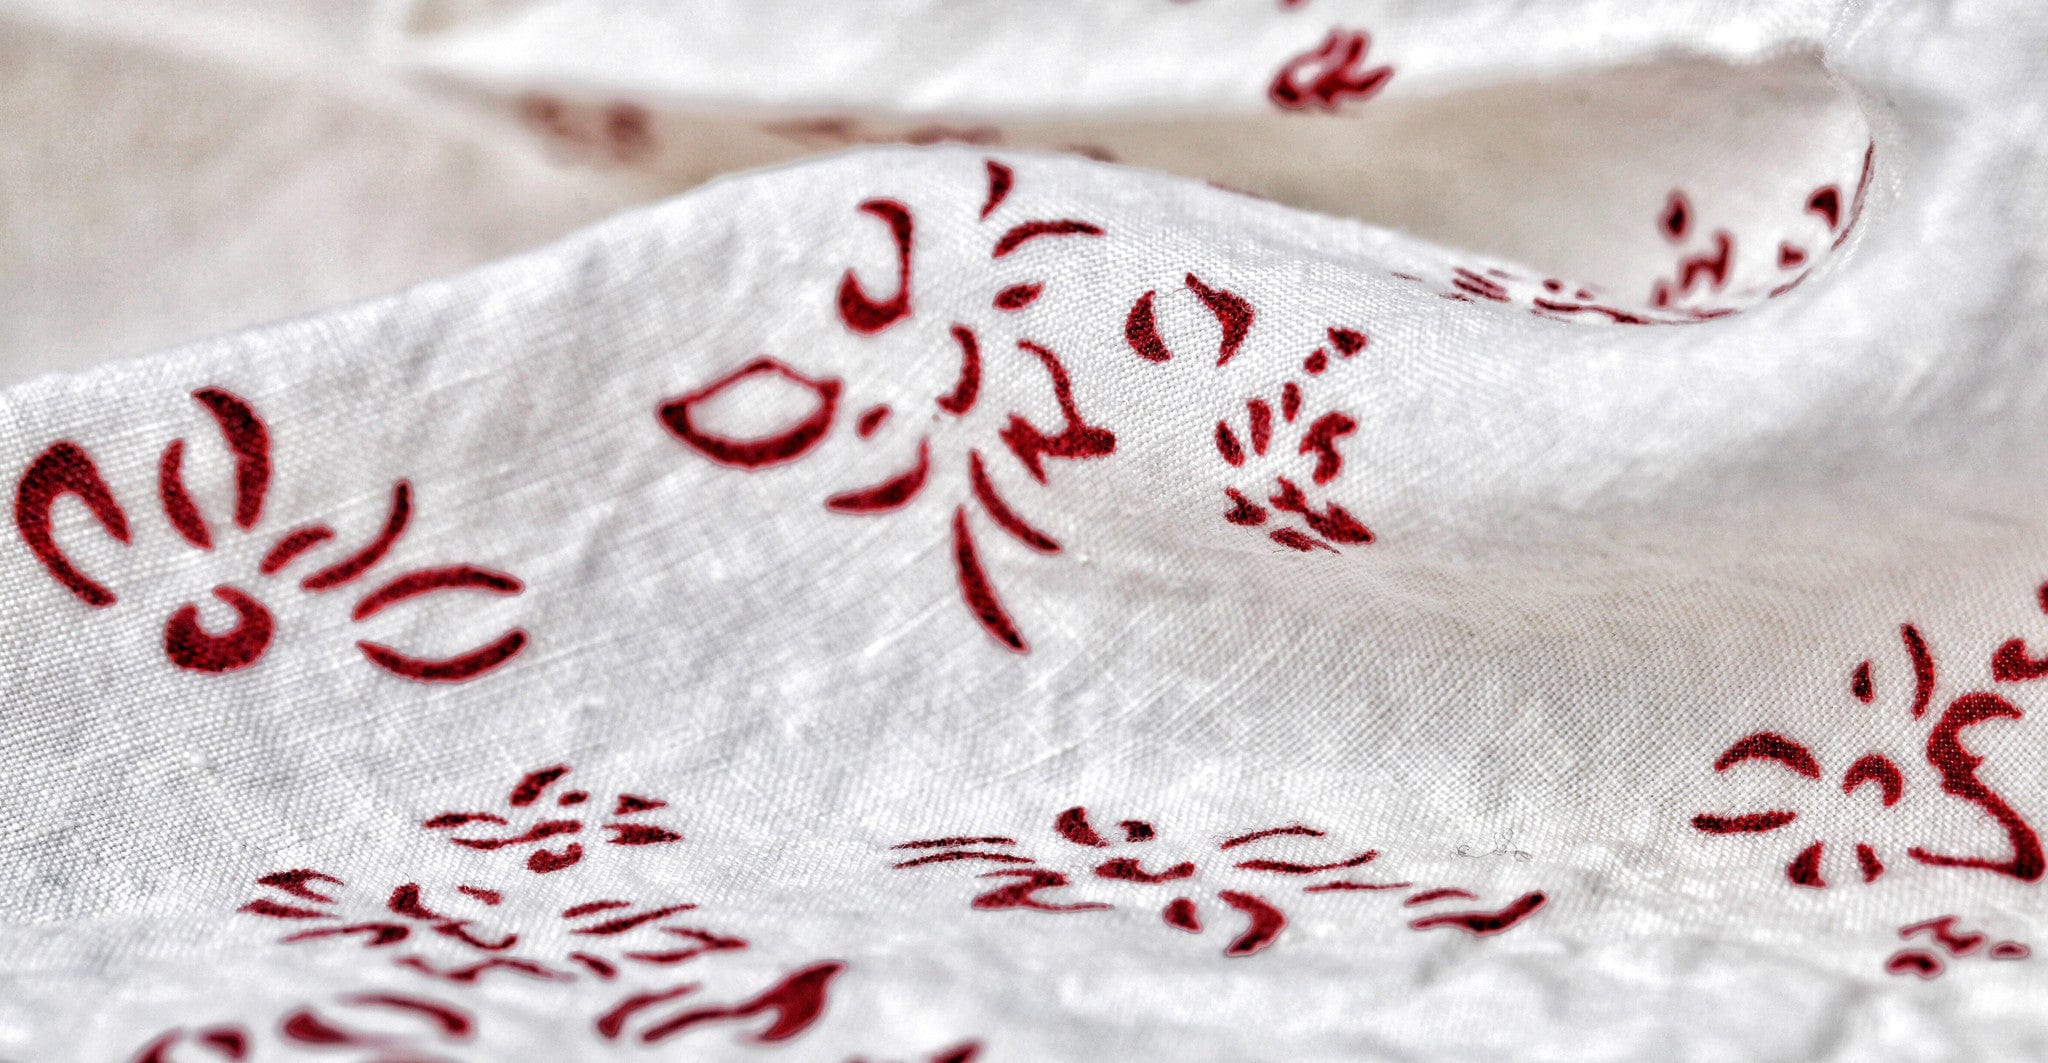 Bernadette's Hand Stamped Falling Flower Linen Tablecloth in Claret Red